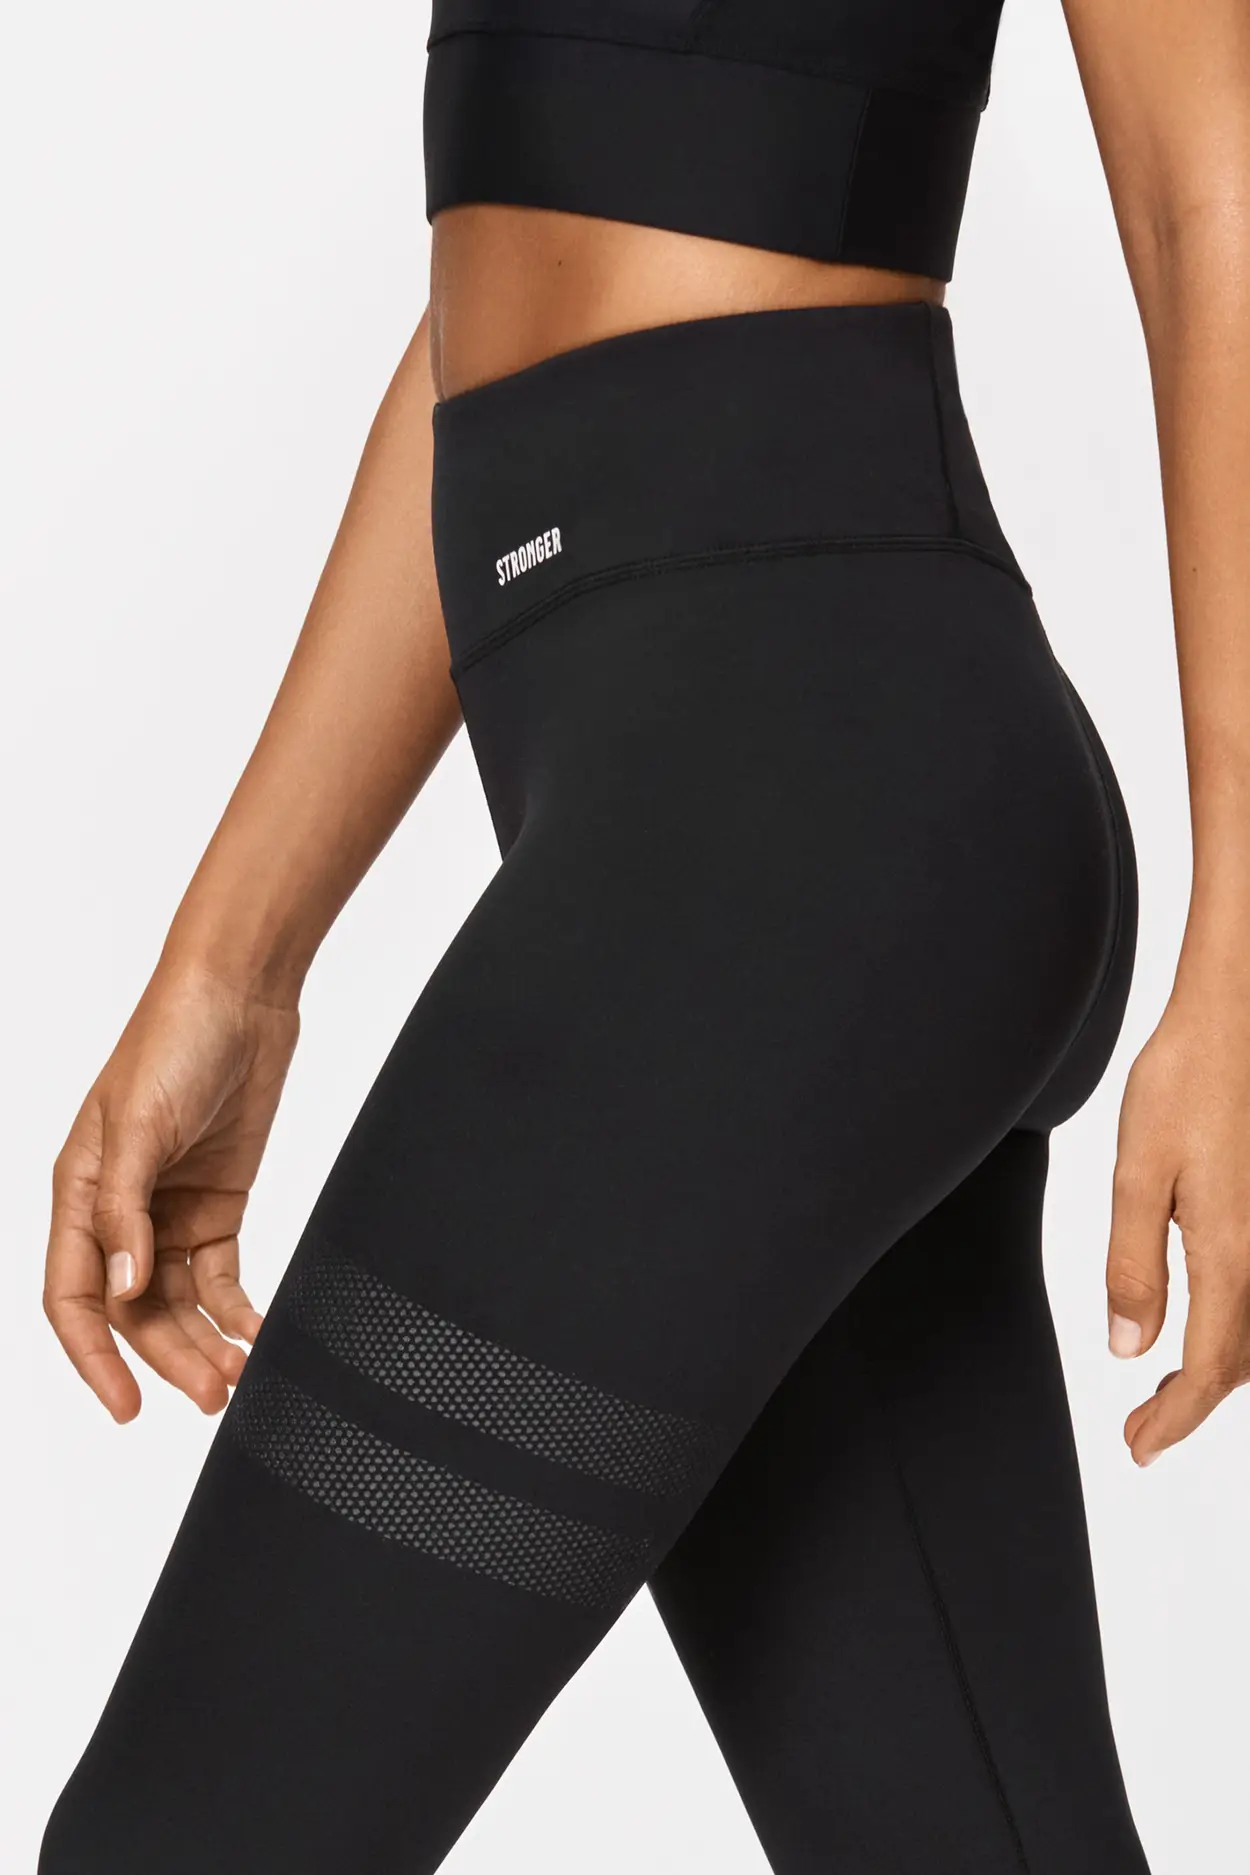 Buy 90 Degree womens cire 22 capri leggings black Online